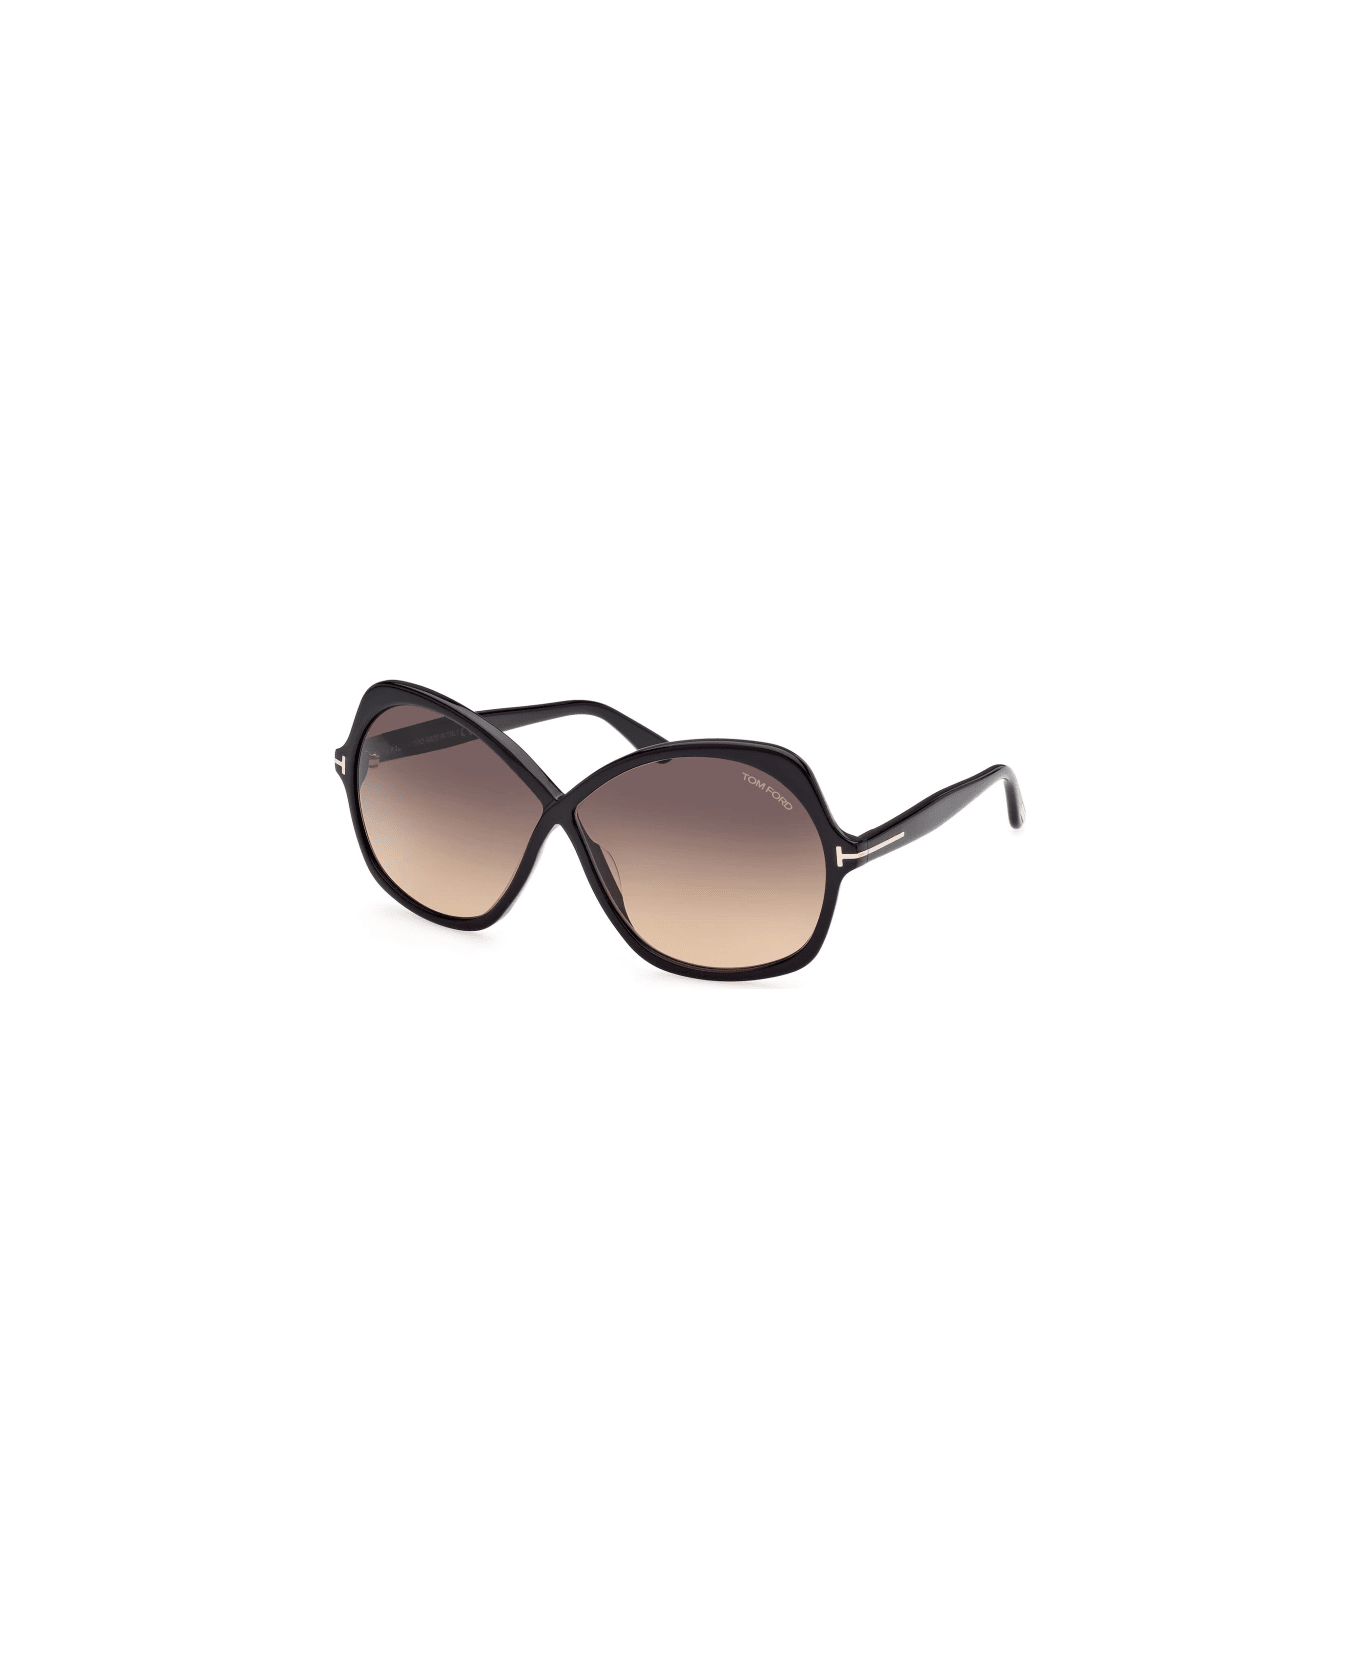 Sunglasses 4105 500187 TF1013 01B Sunglasses - Nero